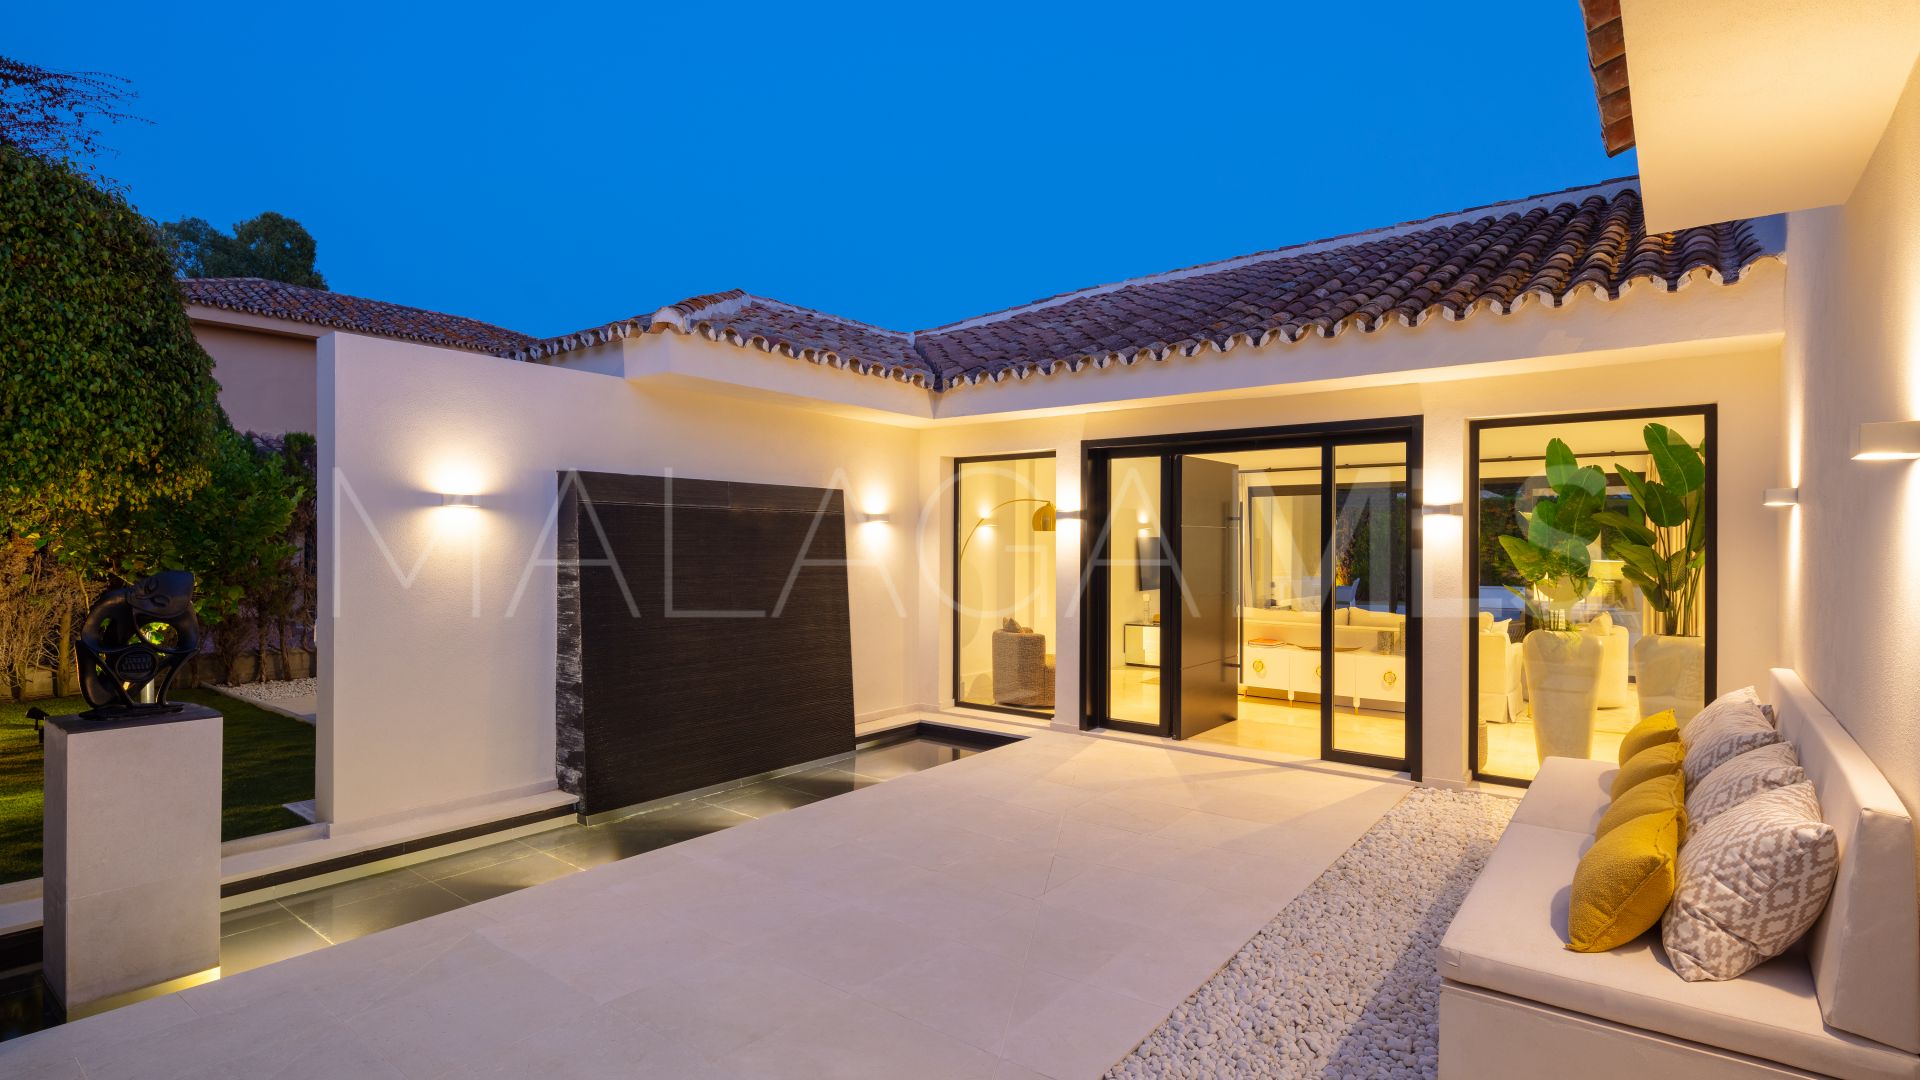 For sale villa with 4 bedrooms in Cortijo Blanco